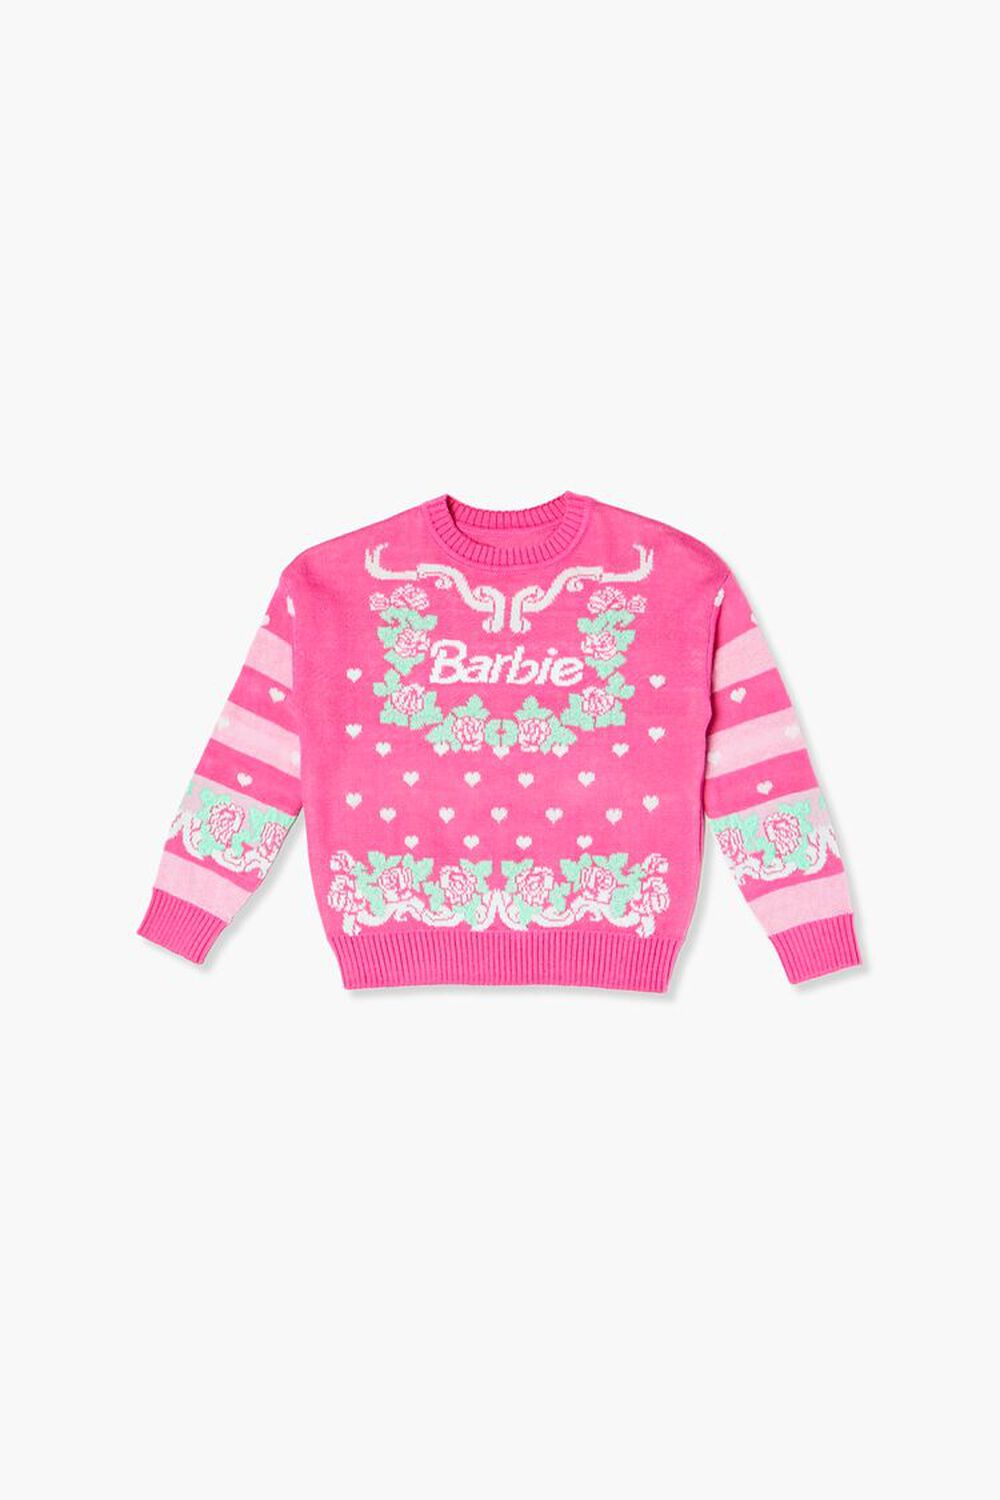 PINK/MULTI Girls Barbie Graphic Sweater (Kids), image 1